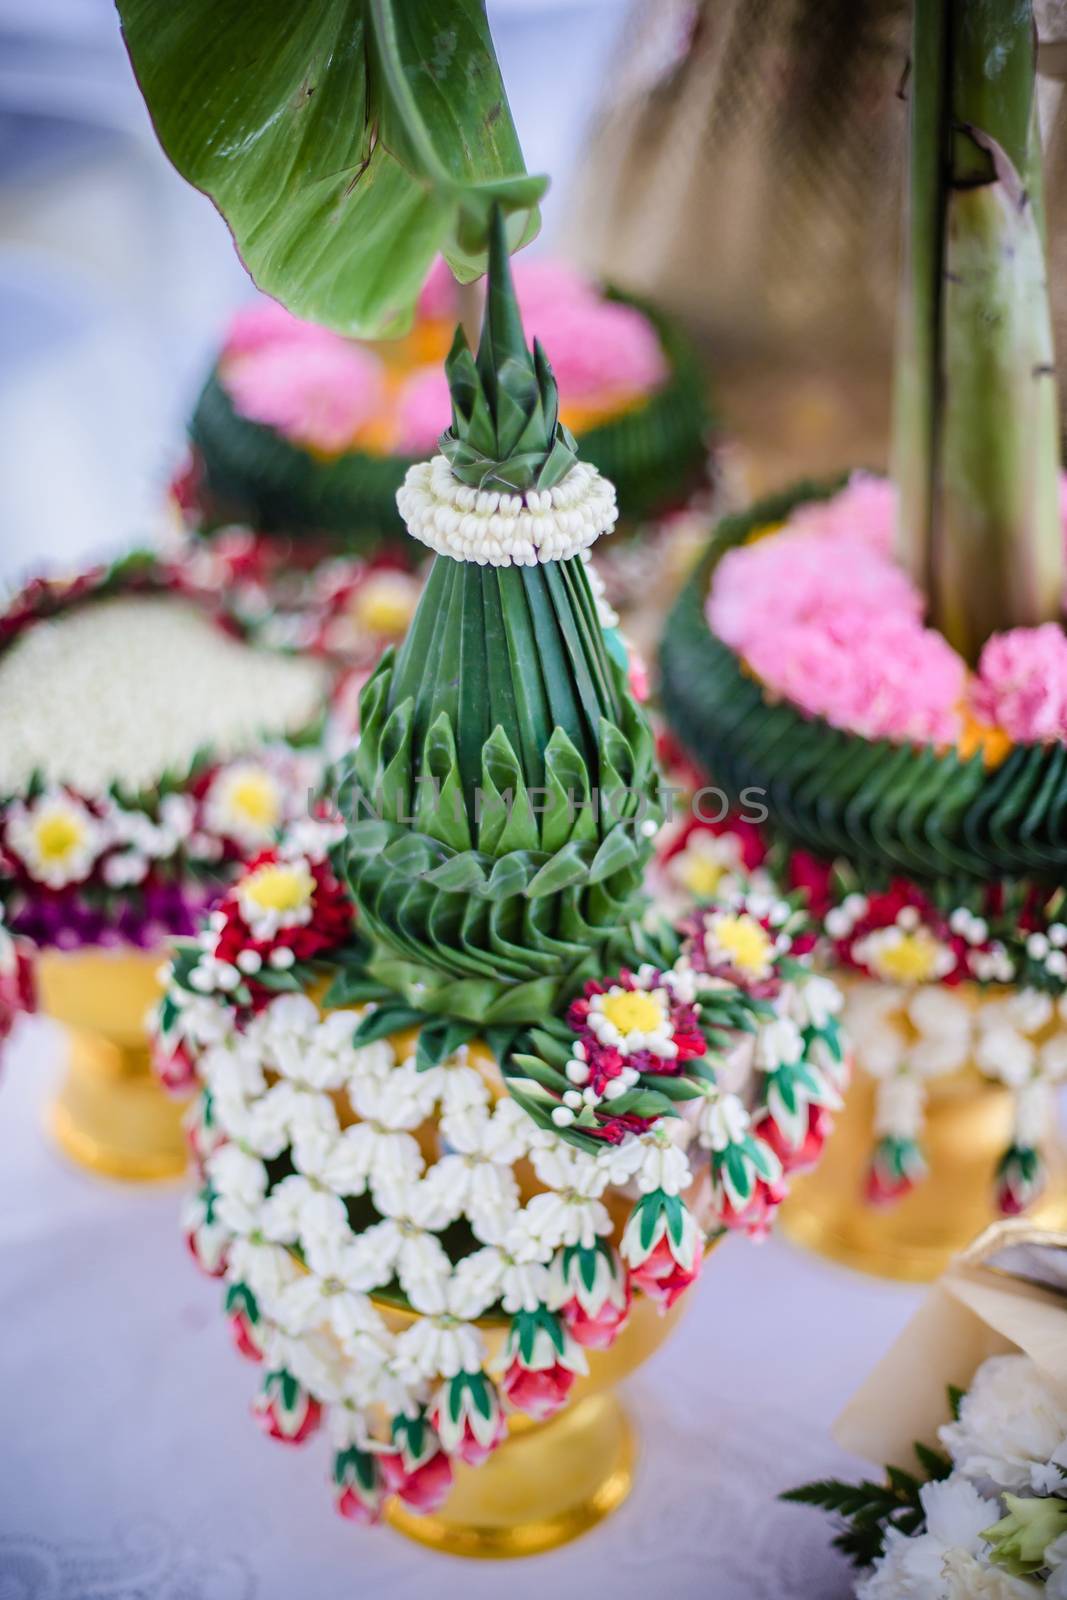 Flower tray for Thai traditional wedding